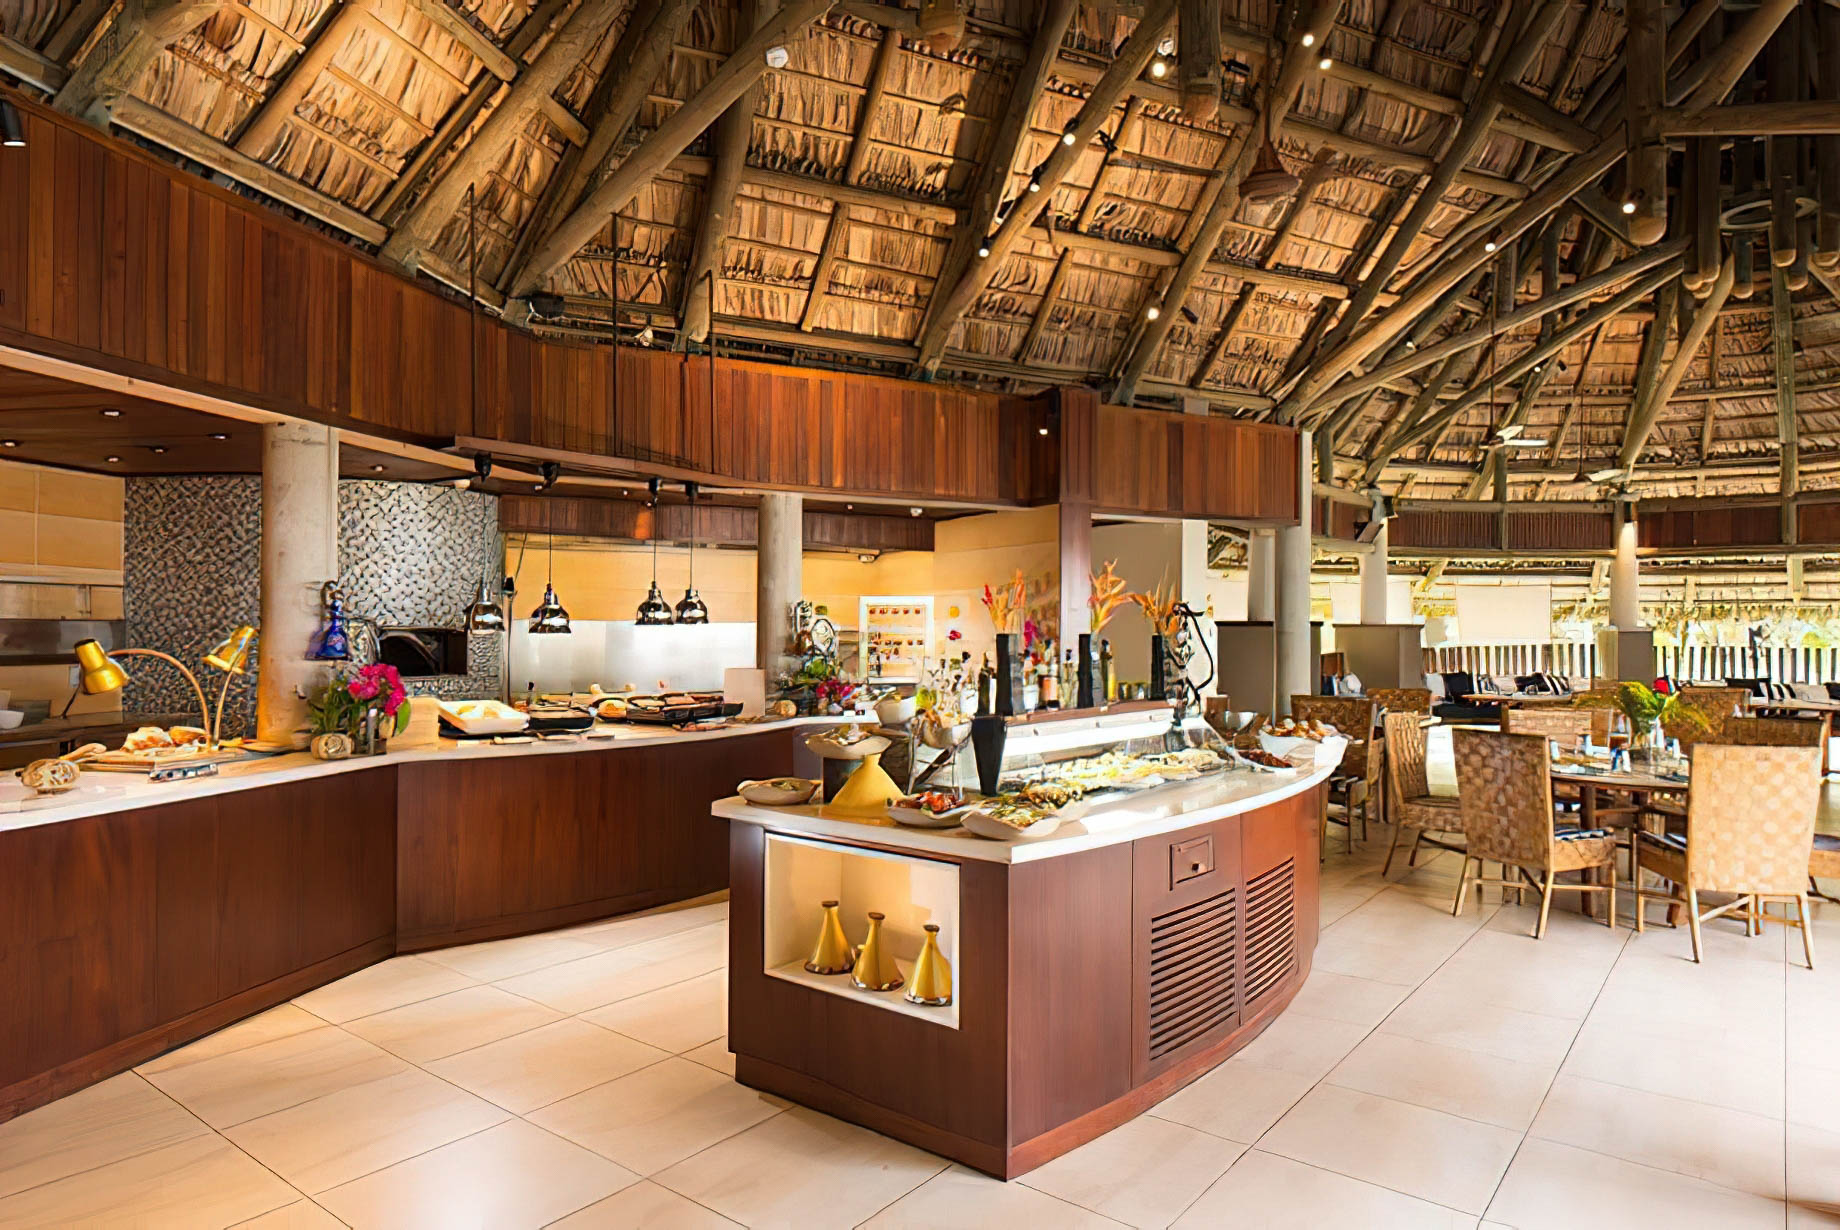 Constance Ephelia Resort - Port Launay, Mahe, Seychelles - Helios Restaurant